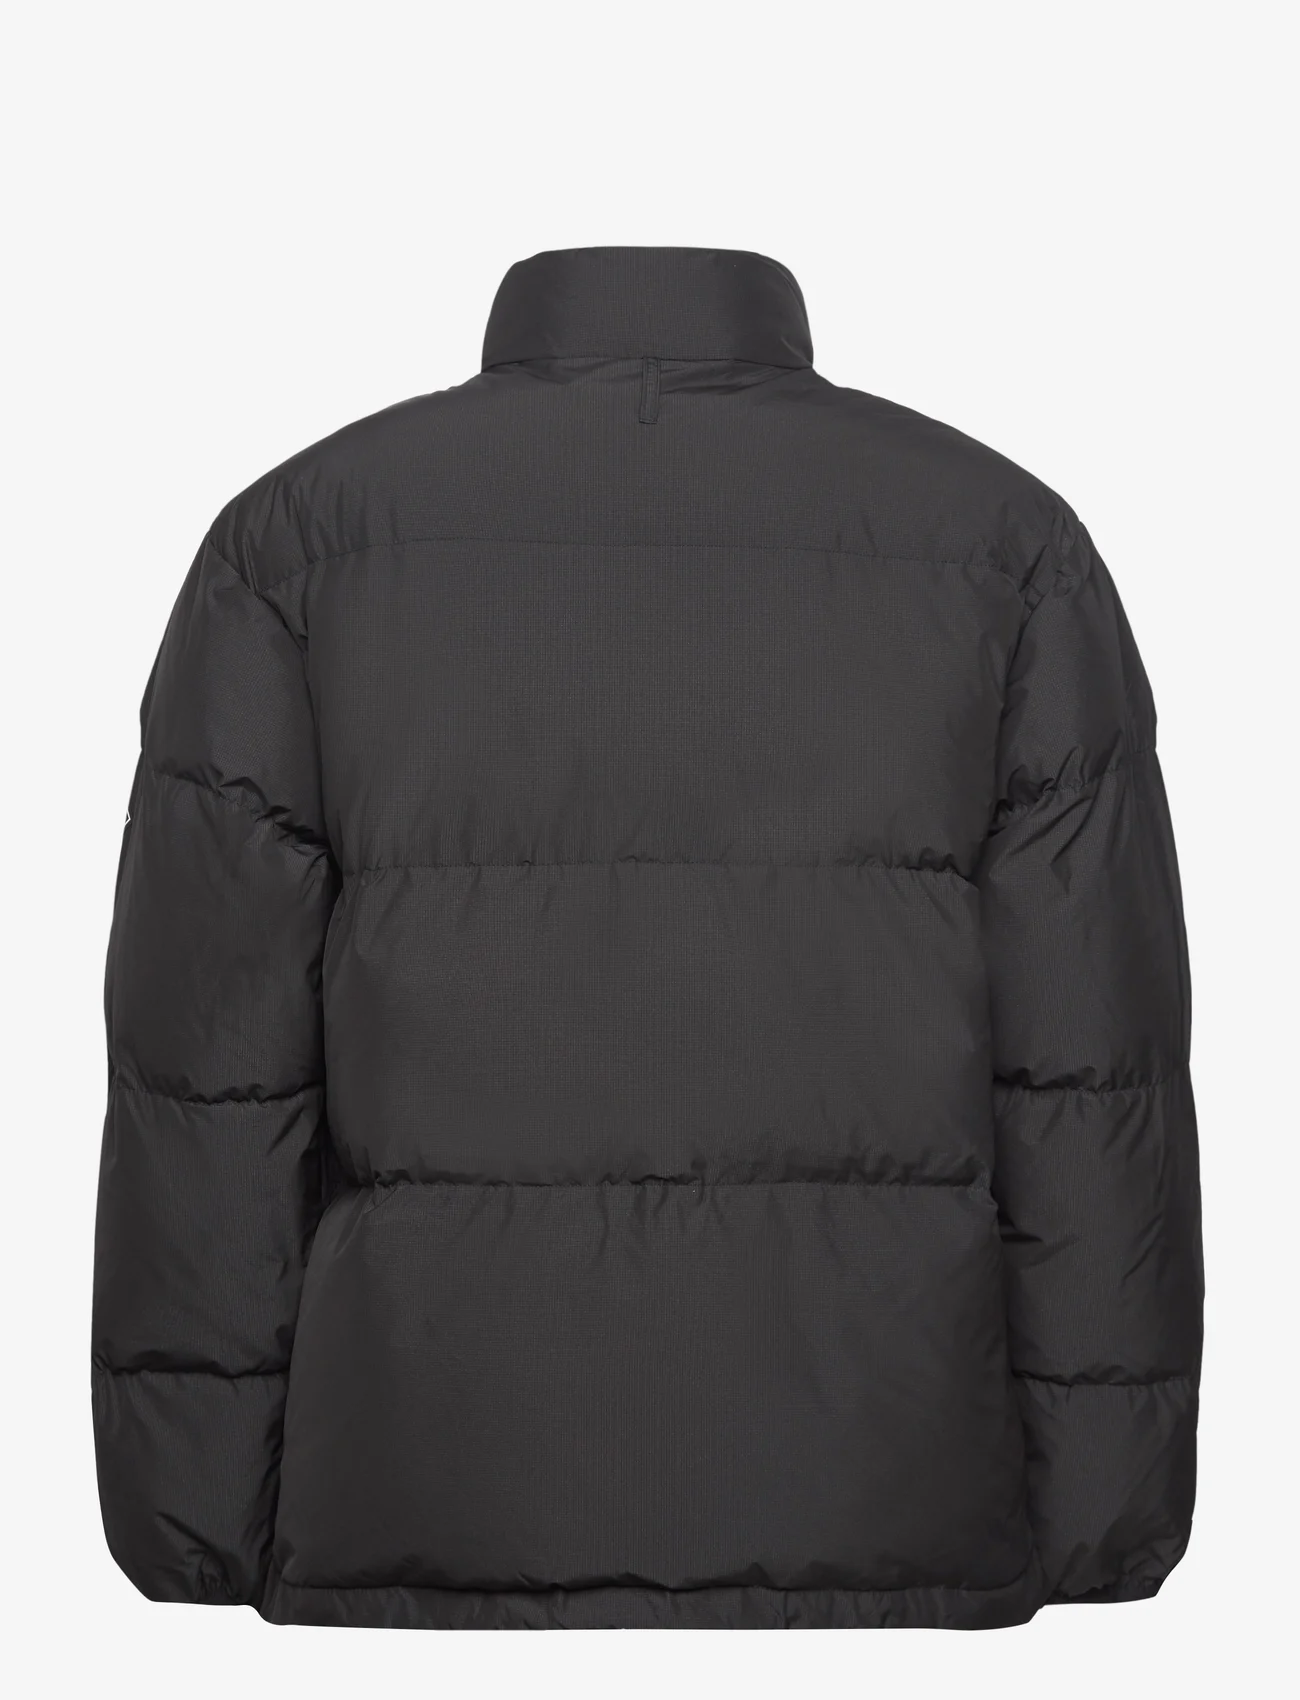 BLS Hafnia - Down Basic Jacket - winter jackets - black - 1